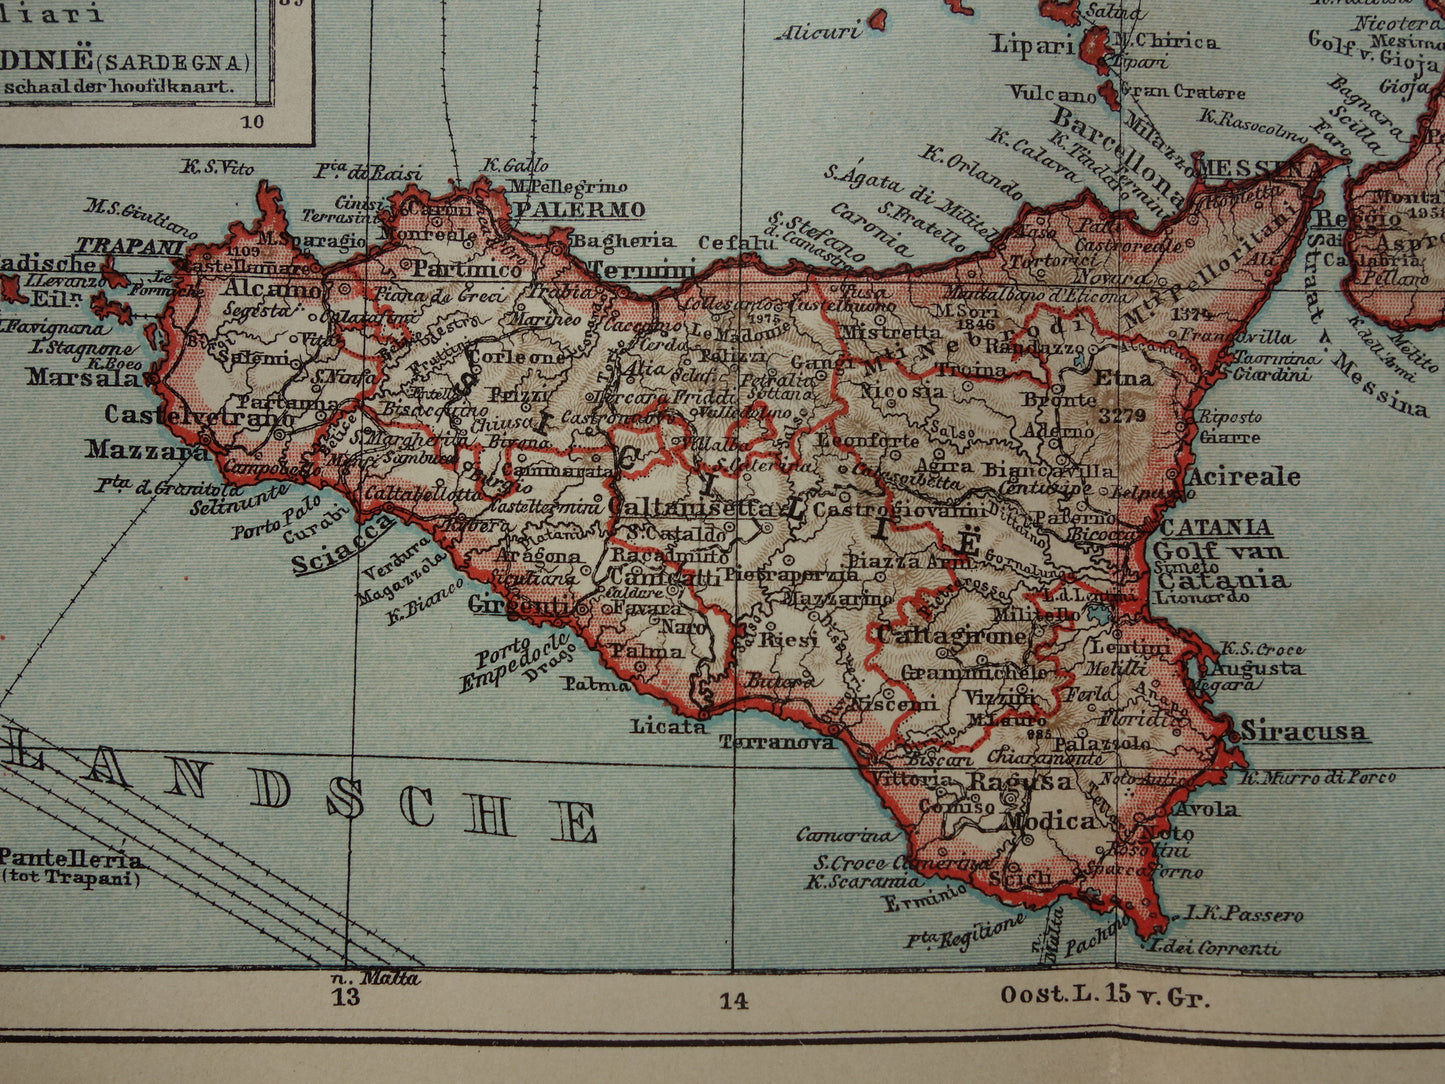 ITALIE oude gedetailleerde kaart van Zuid-Italië uit 1908 originele vintage landkaart Sicilië Sardinië Palermo Messina